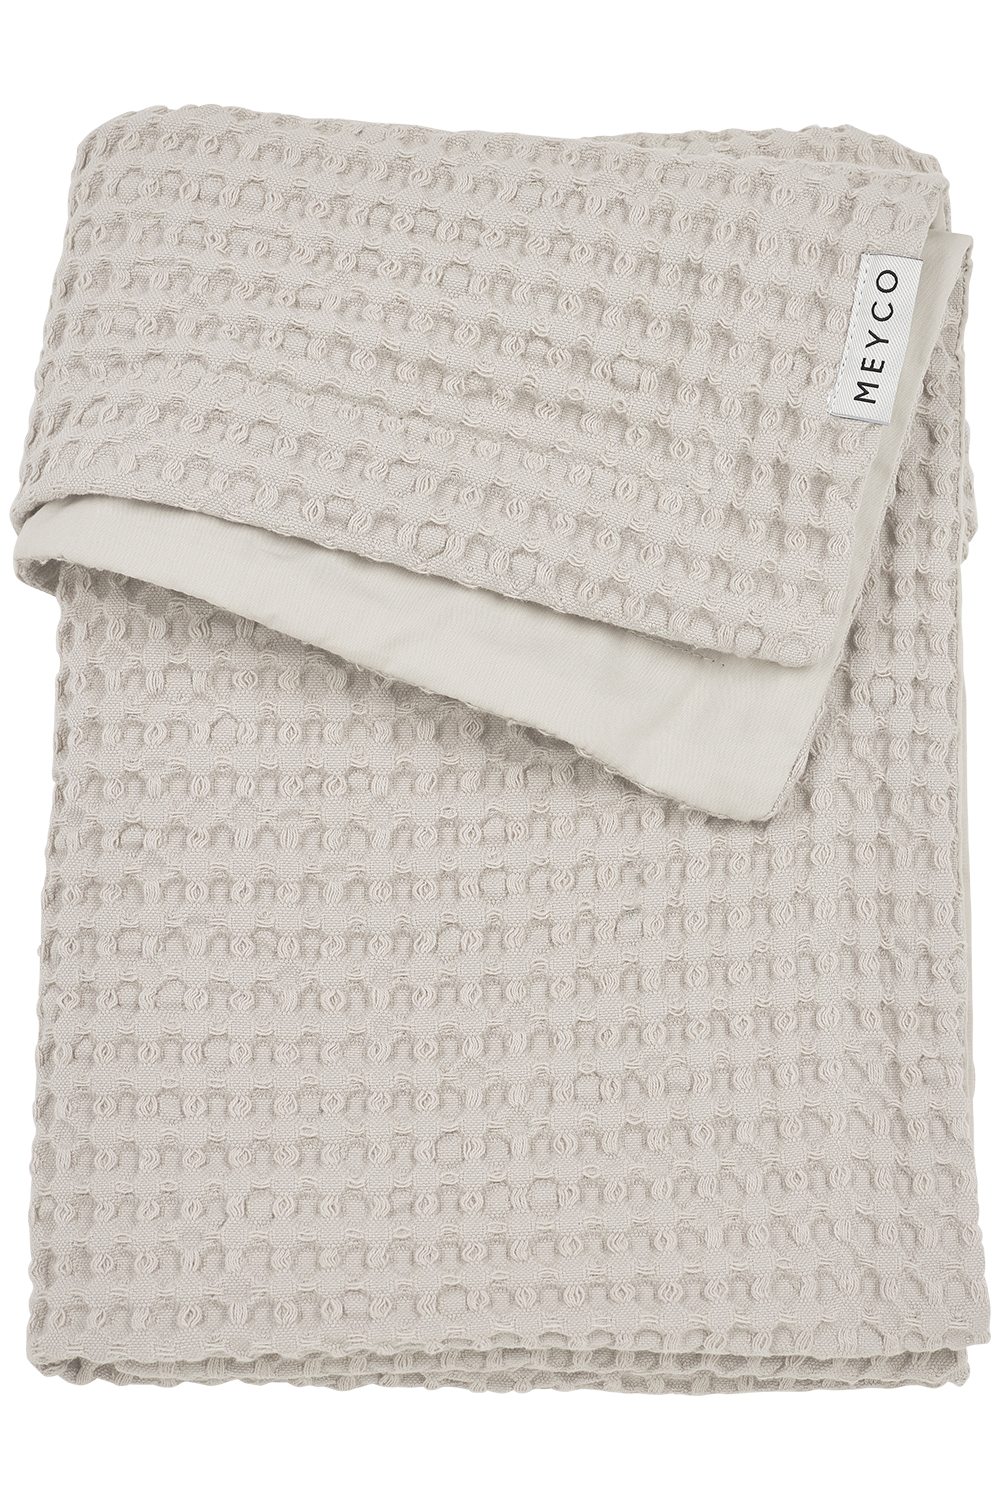 Crib bed blanket Waffle Cotton - greige - 75x100cm